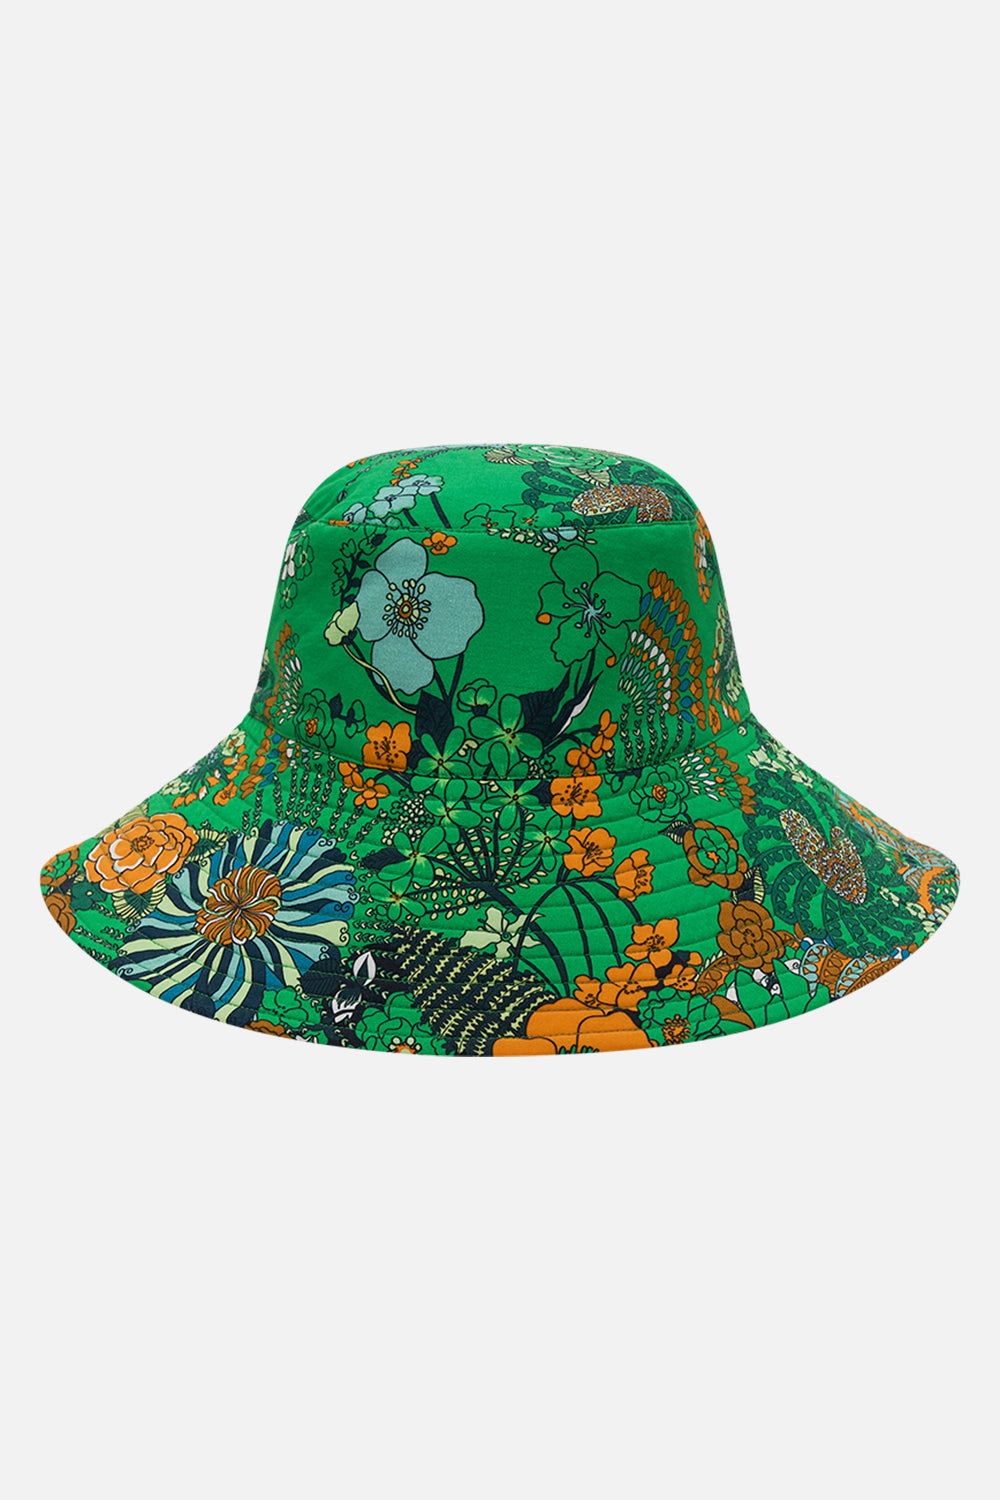 CAMILLA green reversible wide brim bucket hat in Good Vibes Generation